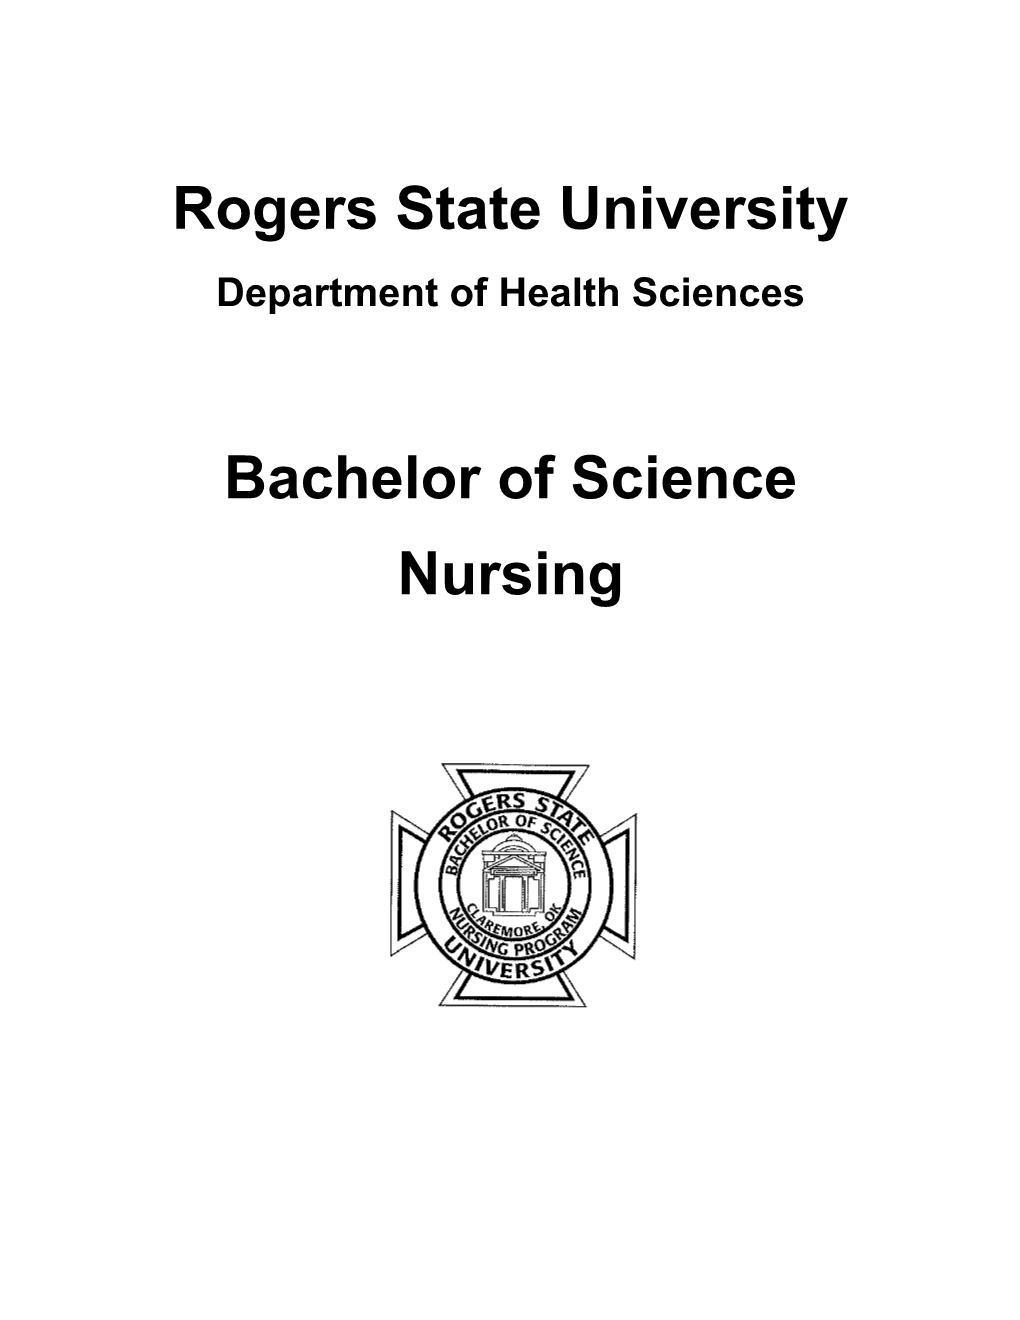 Rogers State University Bachelor of Science Nursing